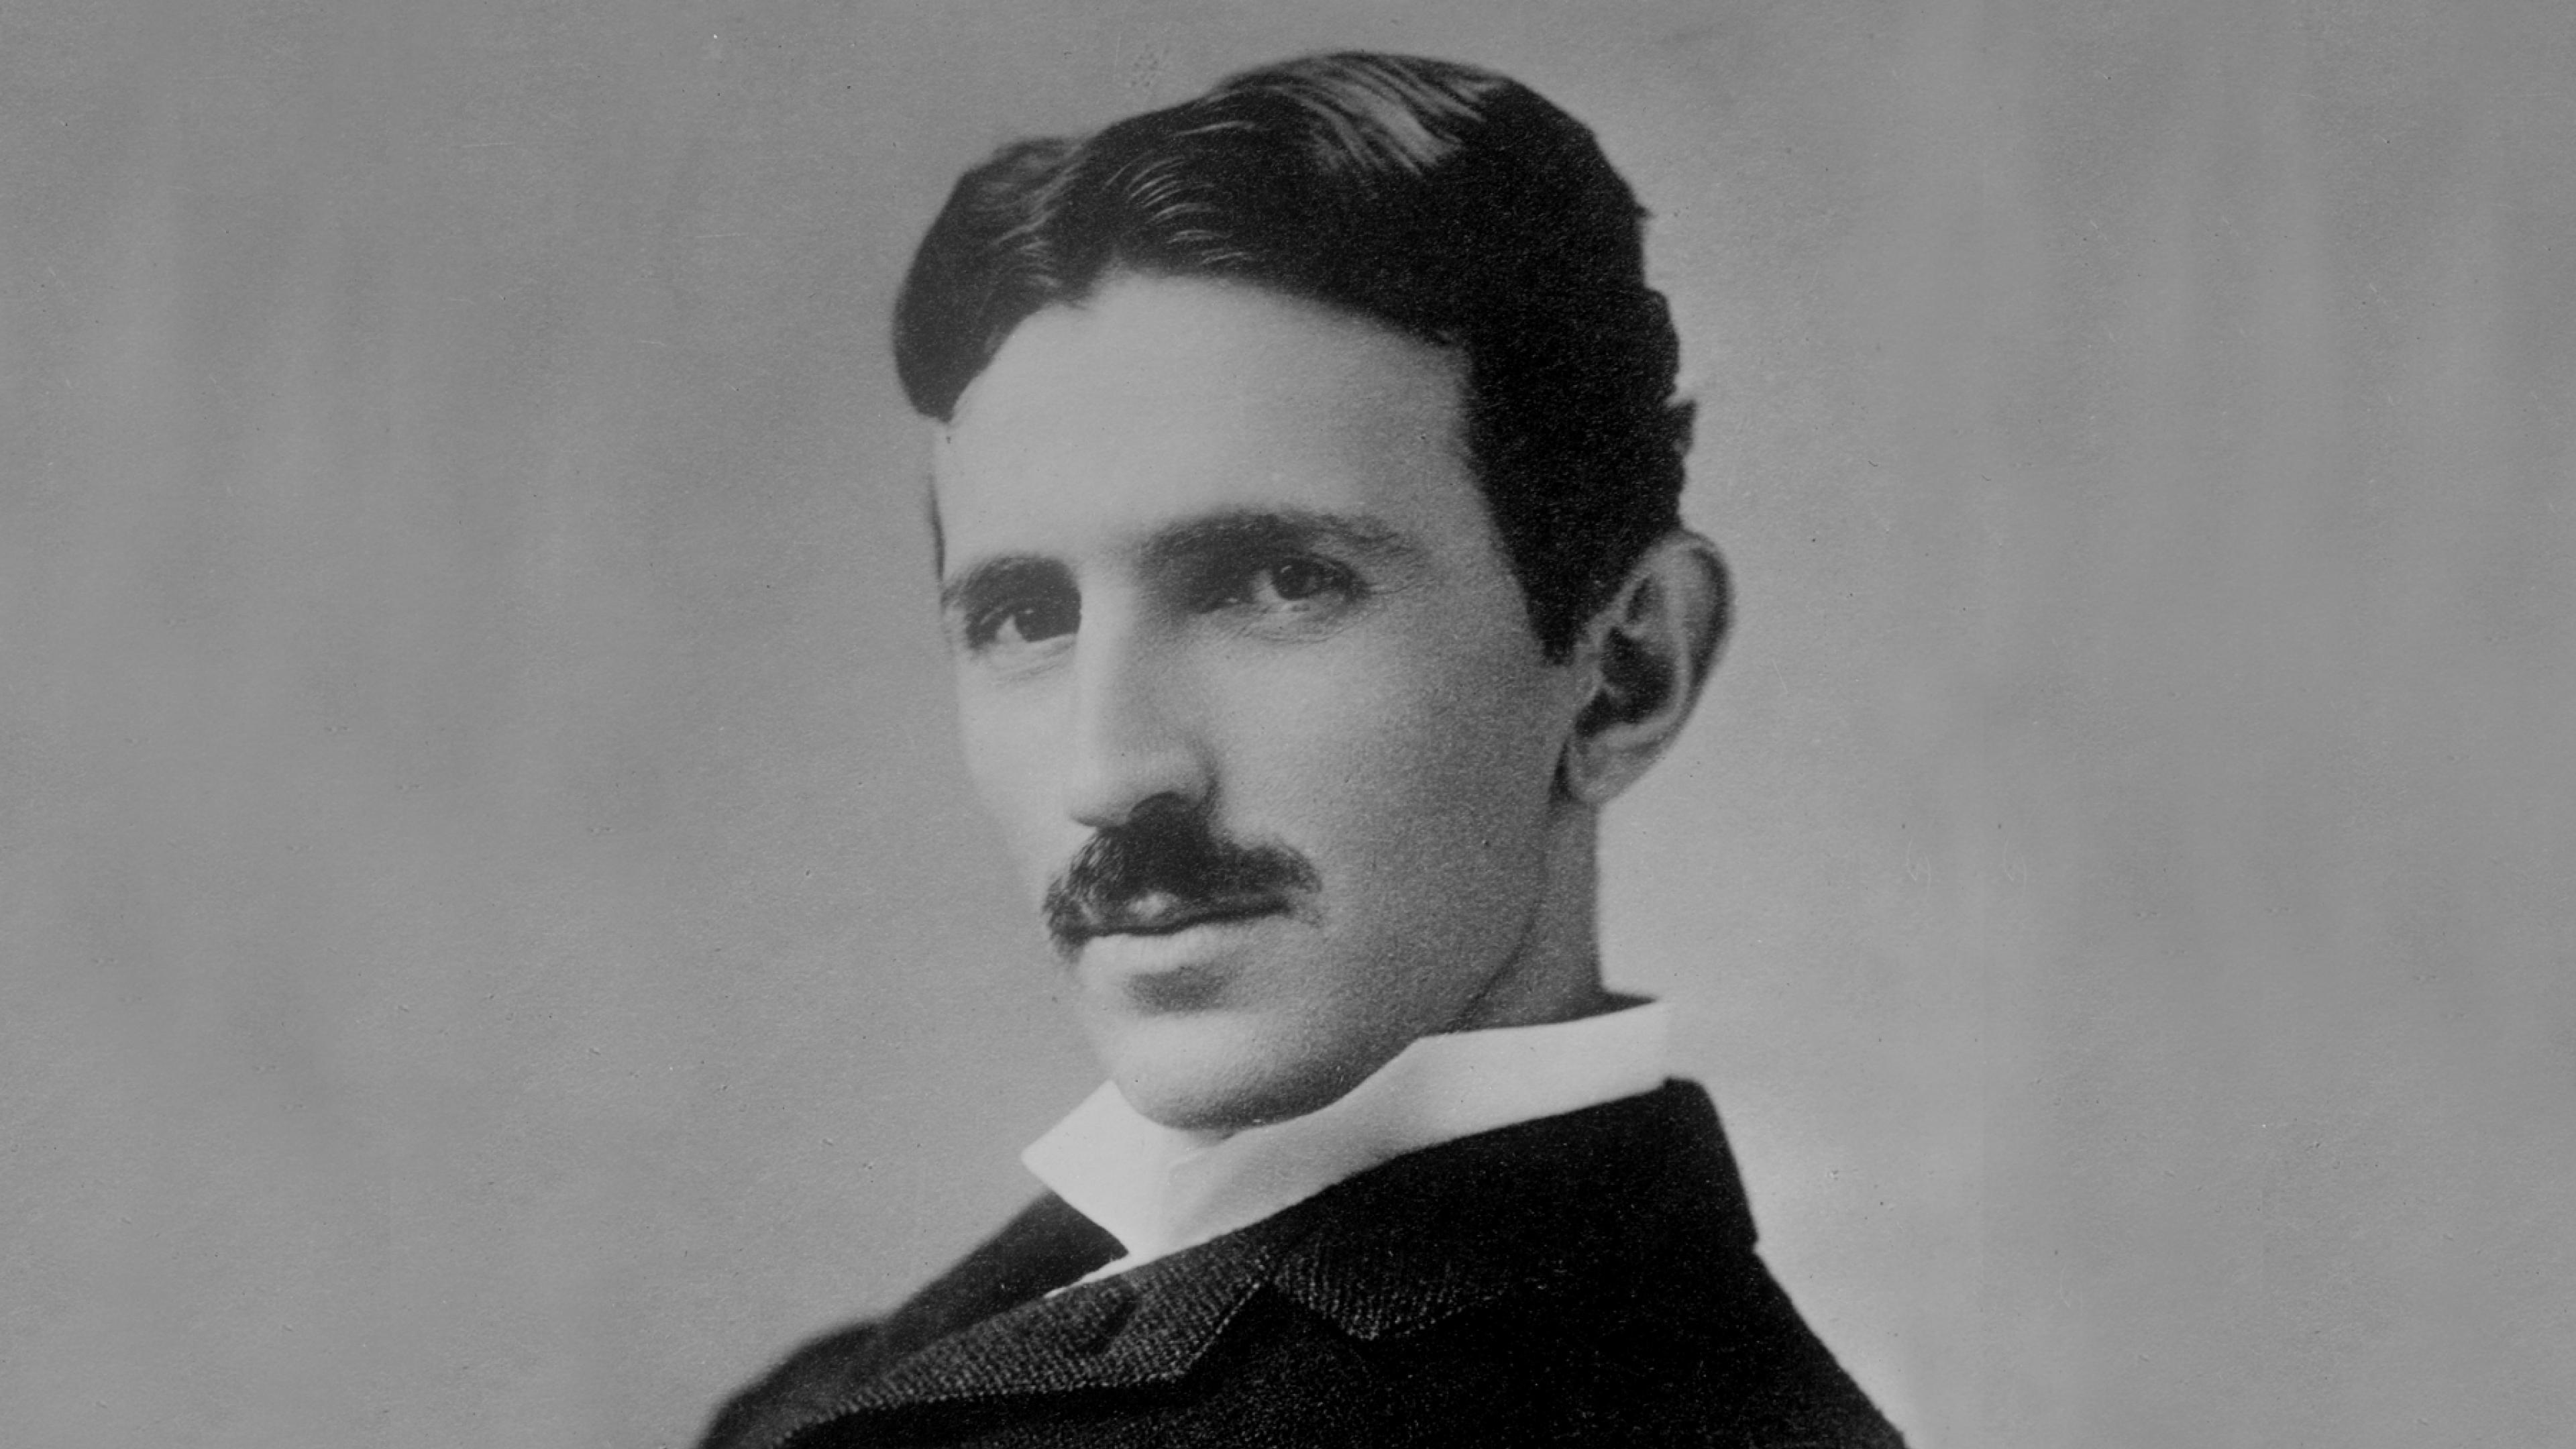 Nikola Tesla Wallpaper Image Photos Pictures Background